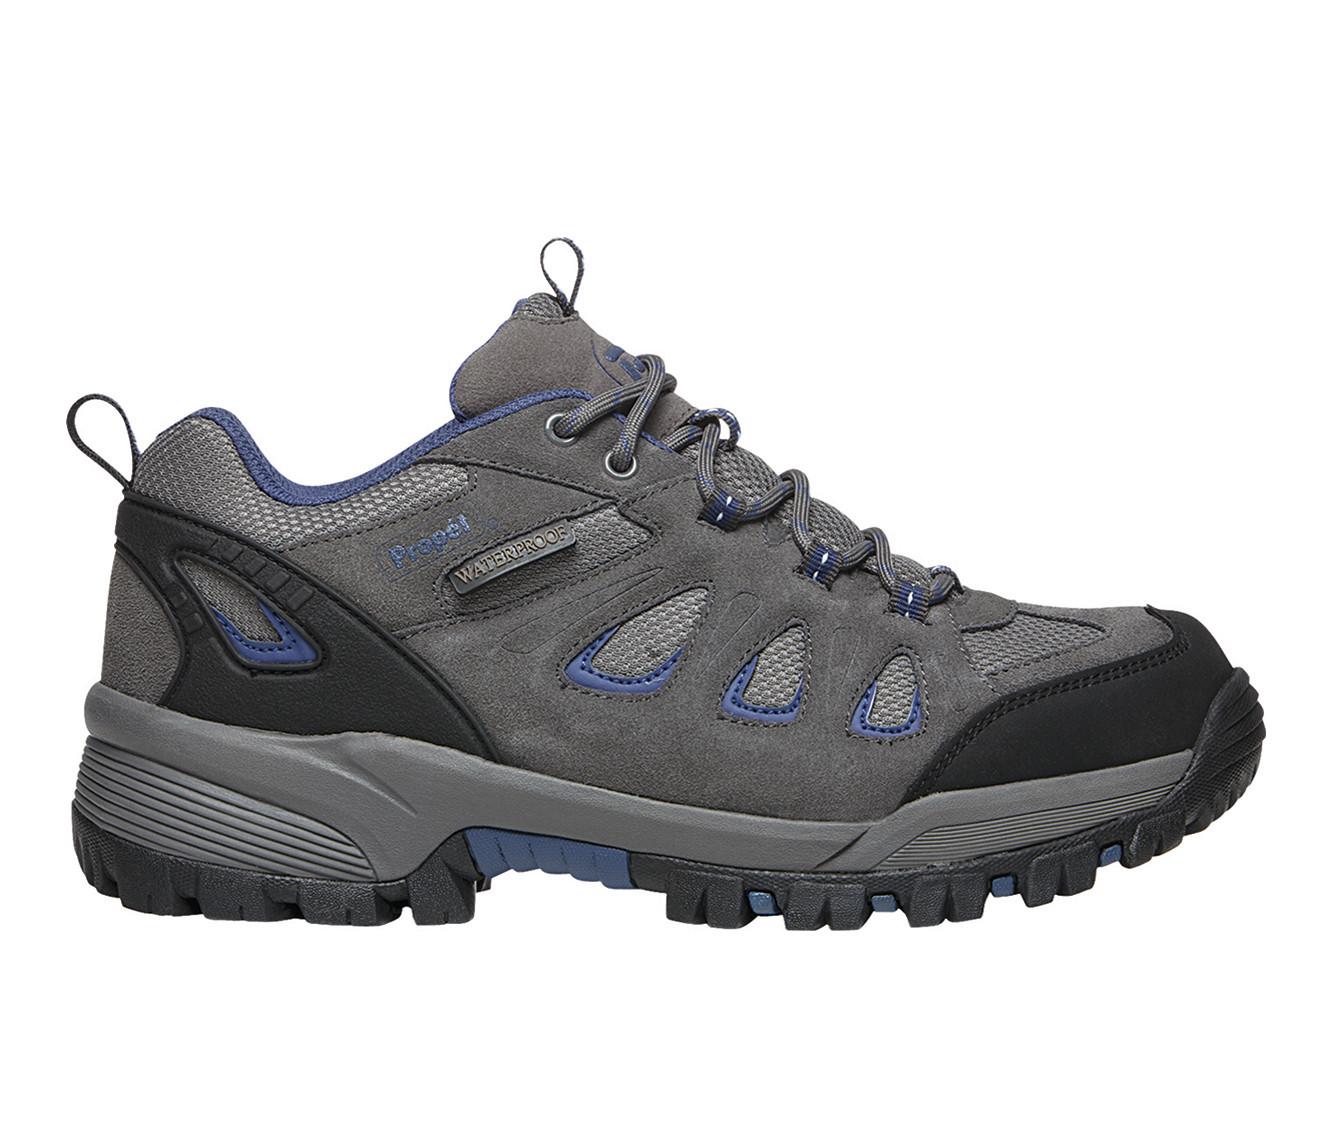 Men's Propet Ridge Walker Low Hiking Boots